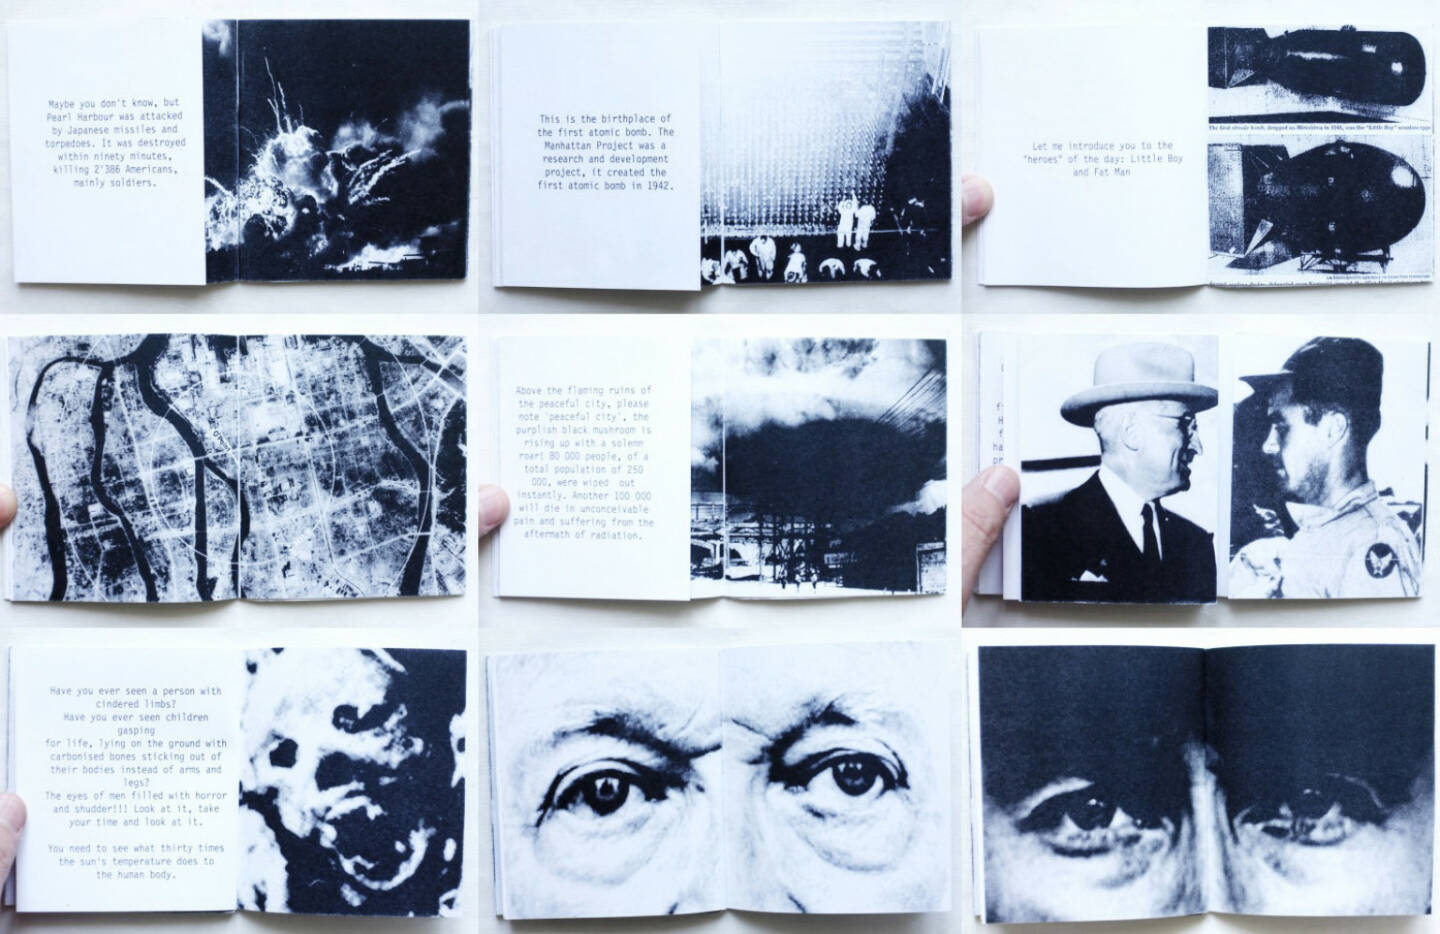 Ilkin Huseynov - 0000000, Riot Books 2014, Beispielseiten, sample spreads - http://josefchladek.com/book/ilkin_huseynov_-_0000000#image-8